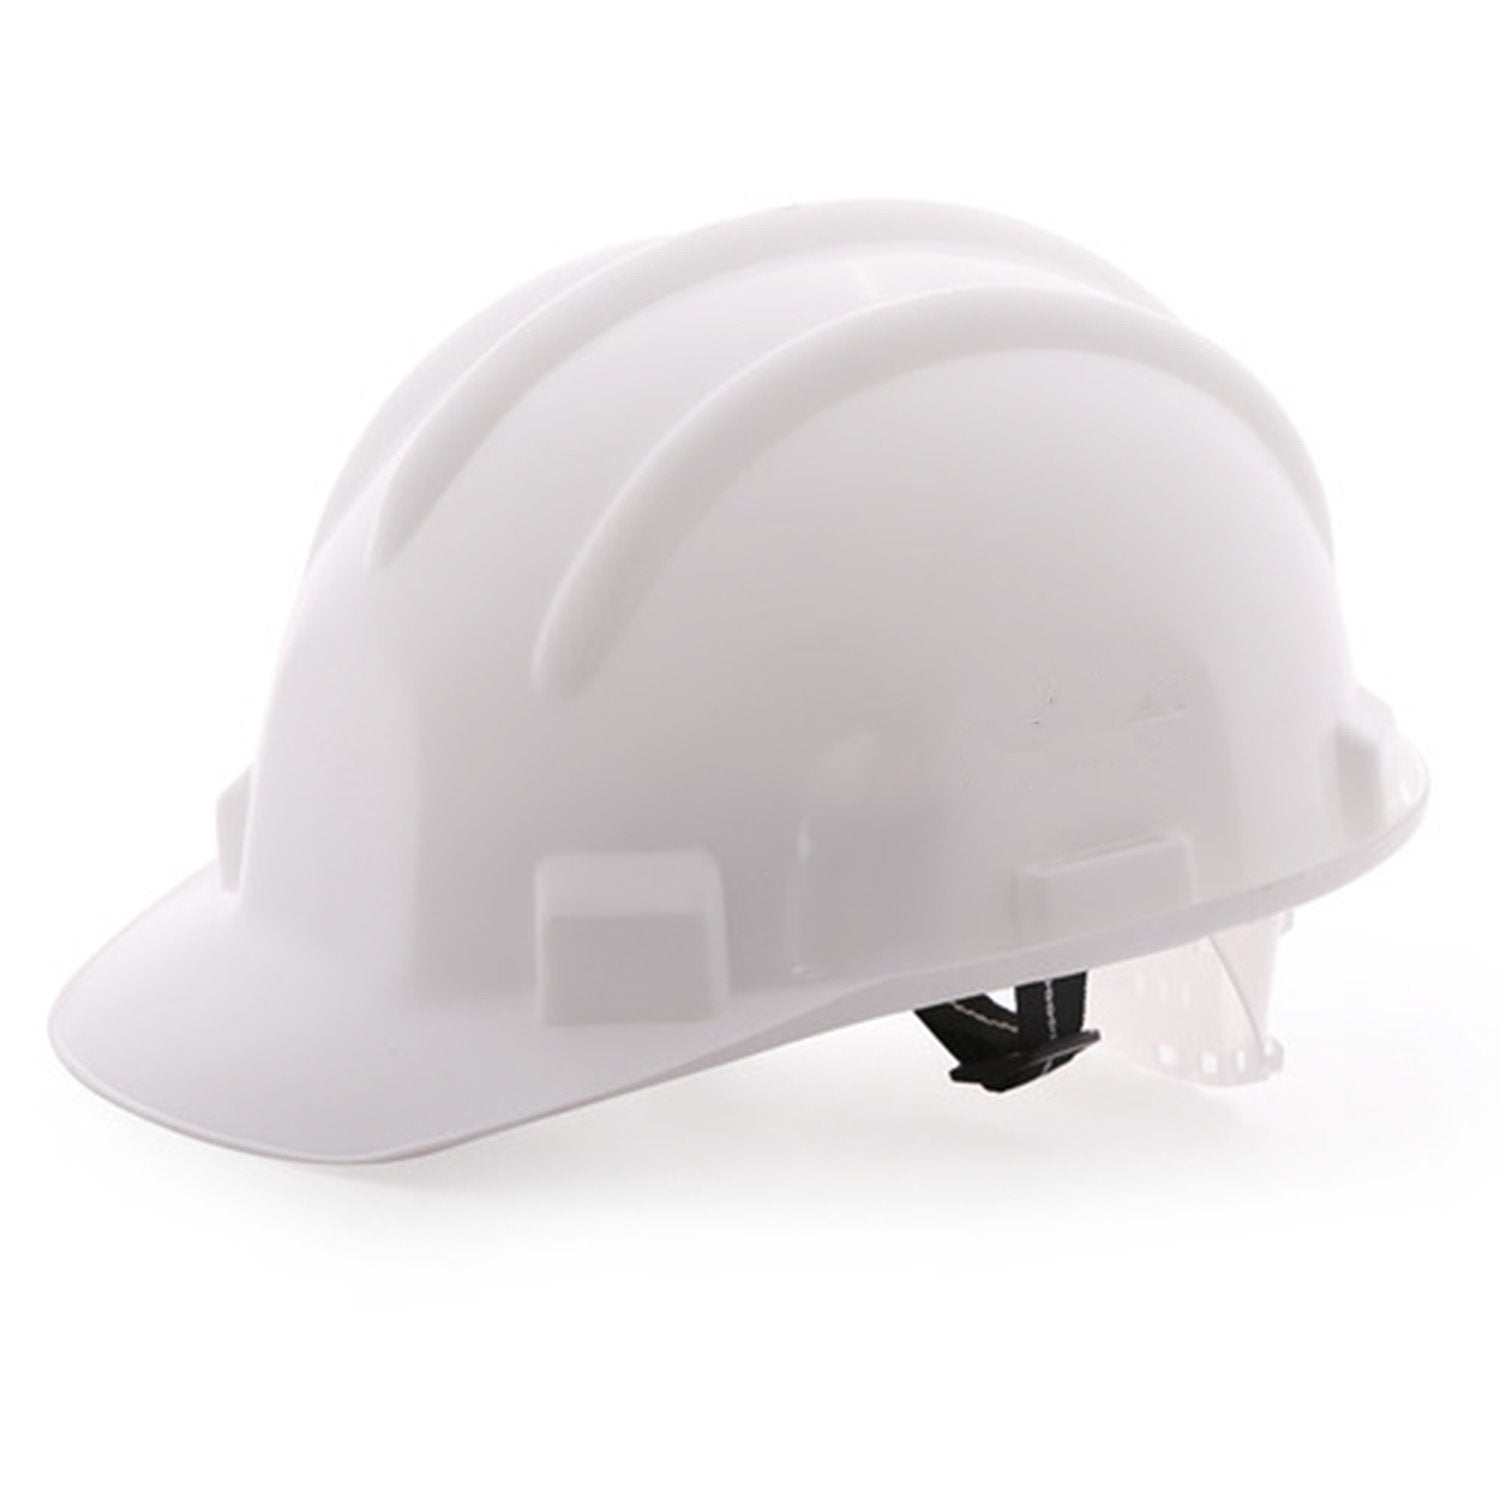 0508 Safety Helmet Construction Protective Helmets Anti-smashing